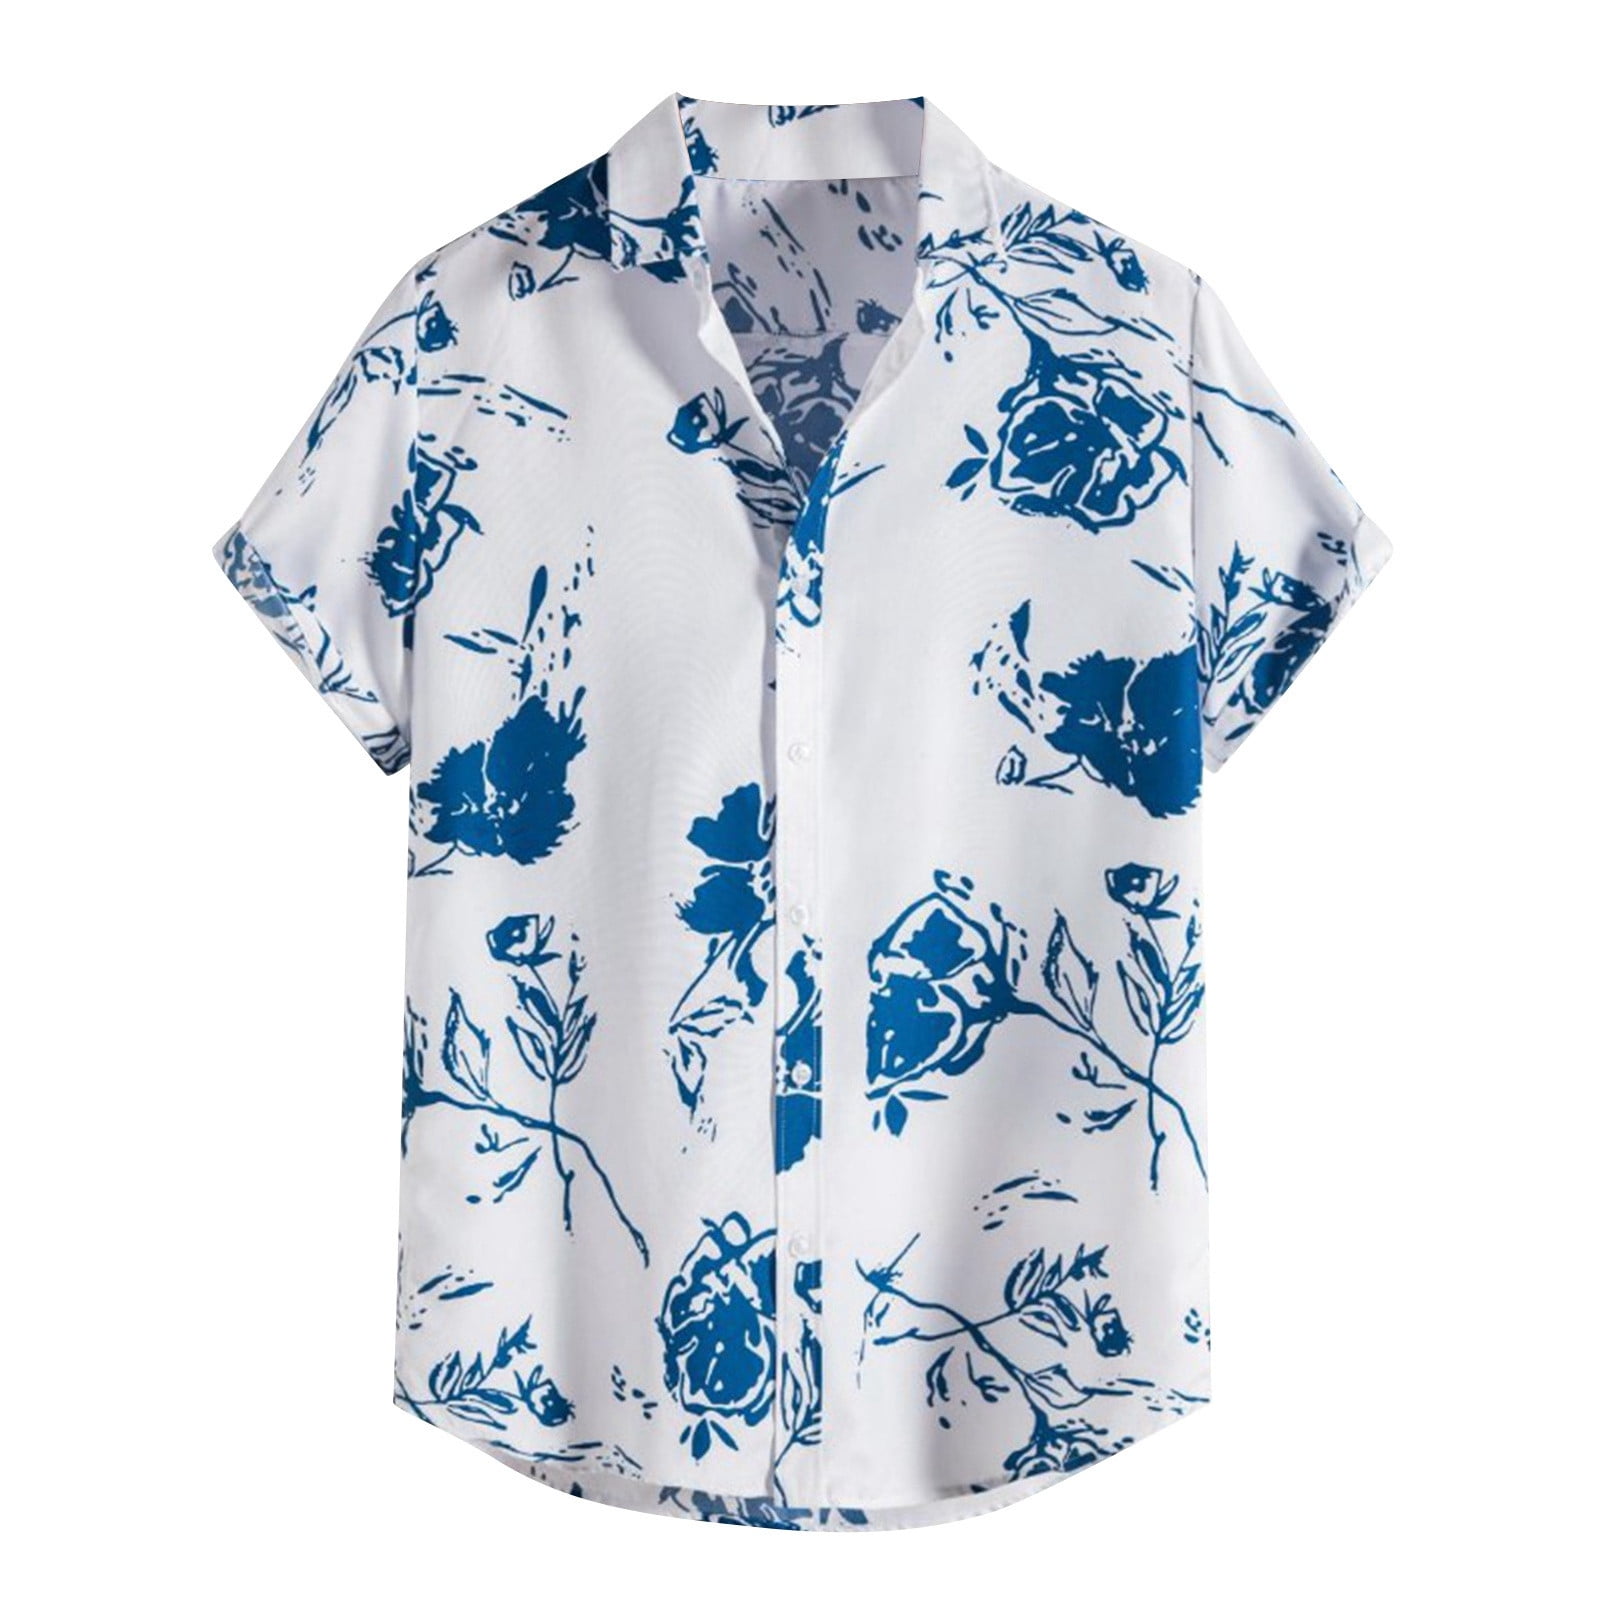 2DXuixsh T Shirts for Men Oversized Summer Casual Printed Shirt Short ...